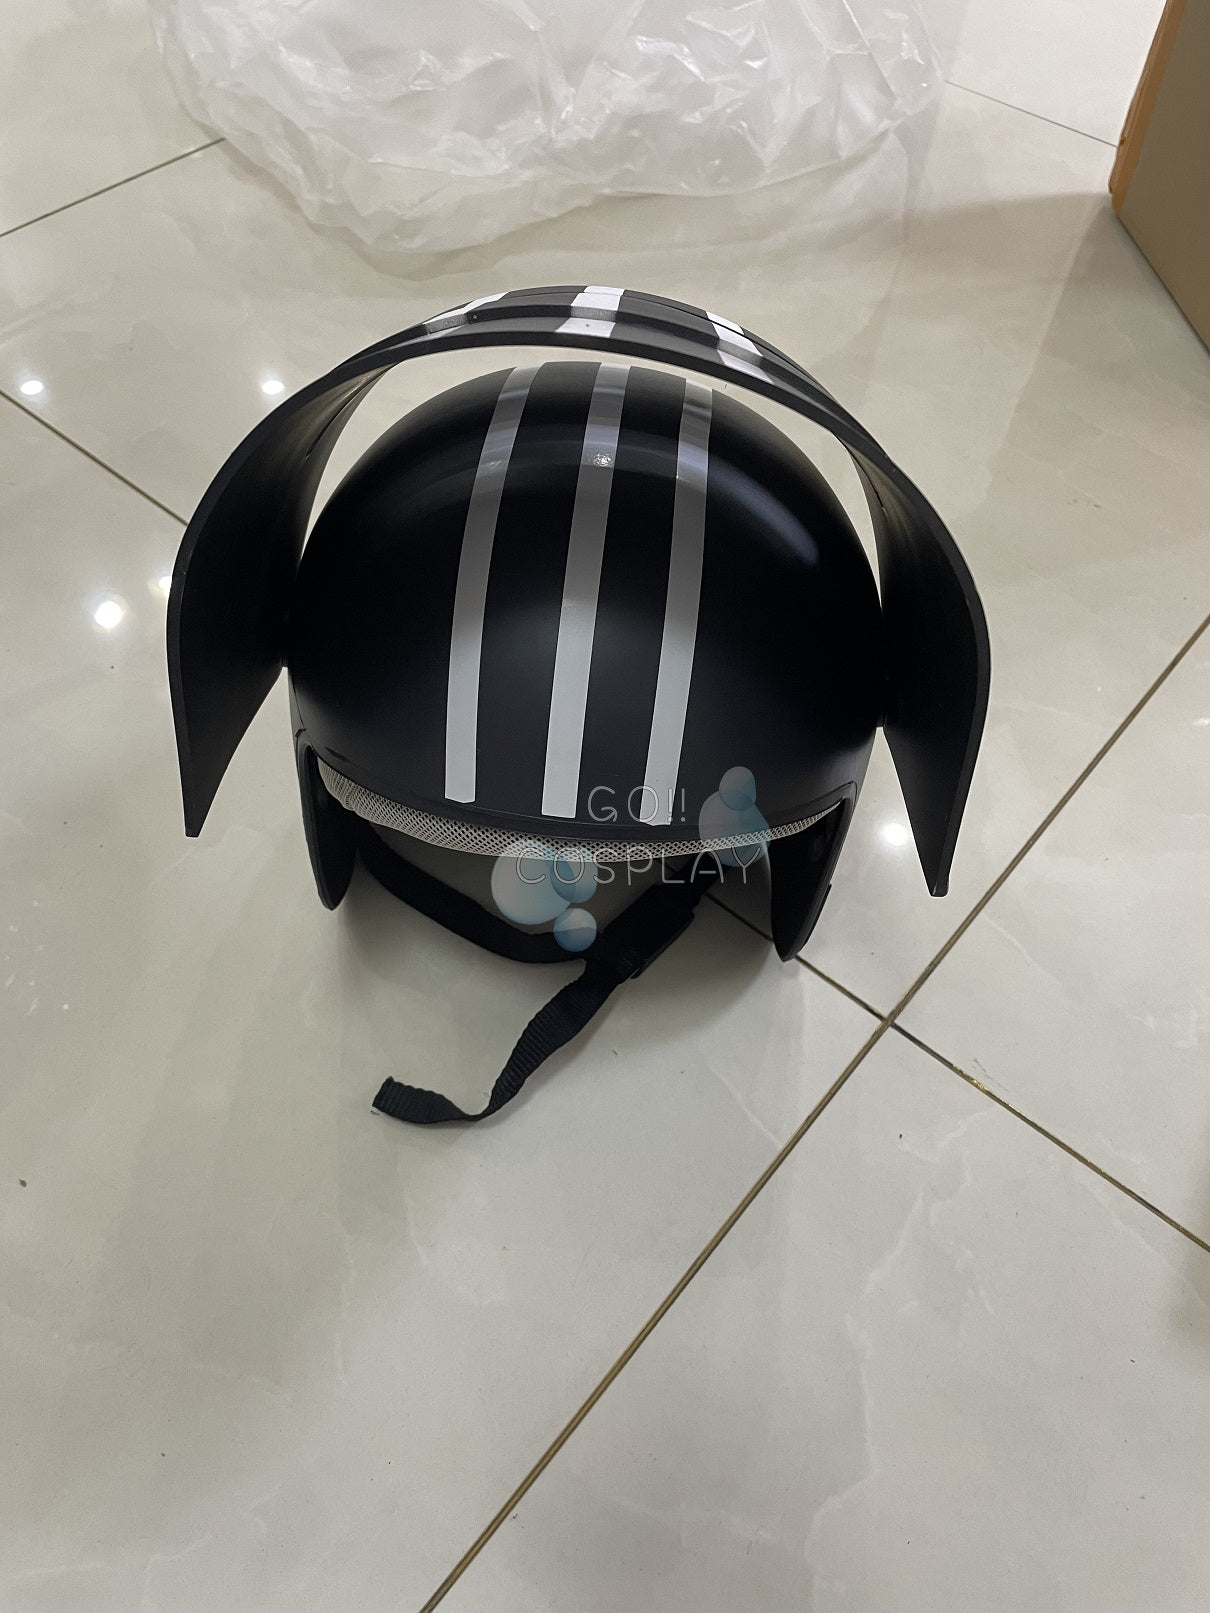 Killa Escape from Tarkov Cosplay Helmet for Sale